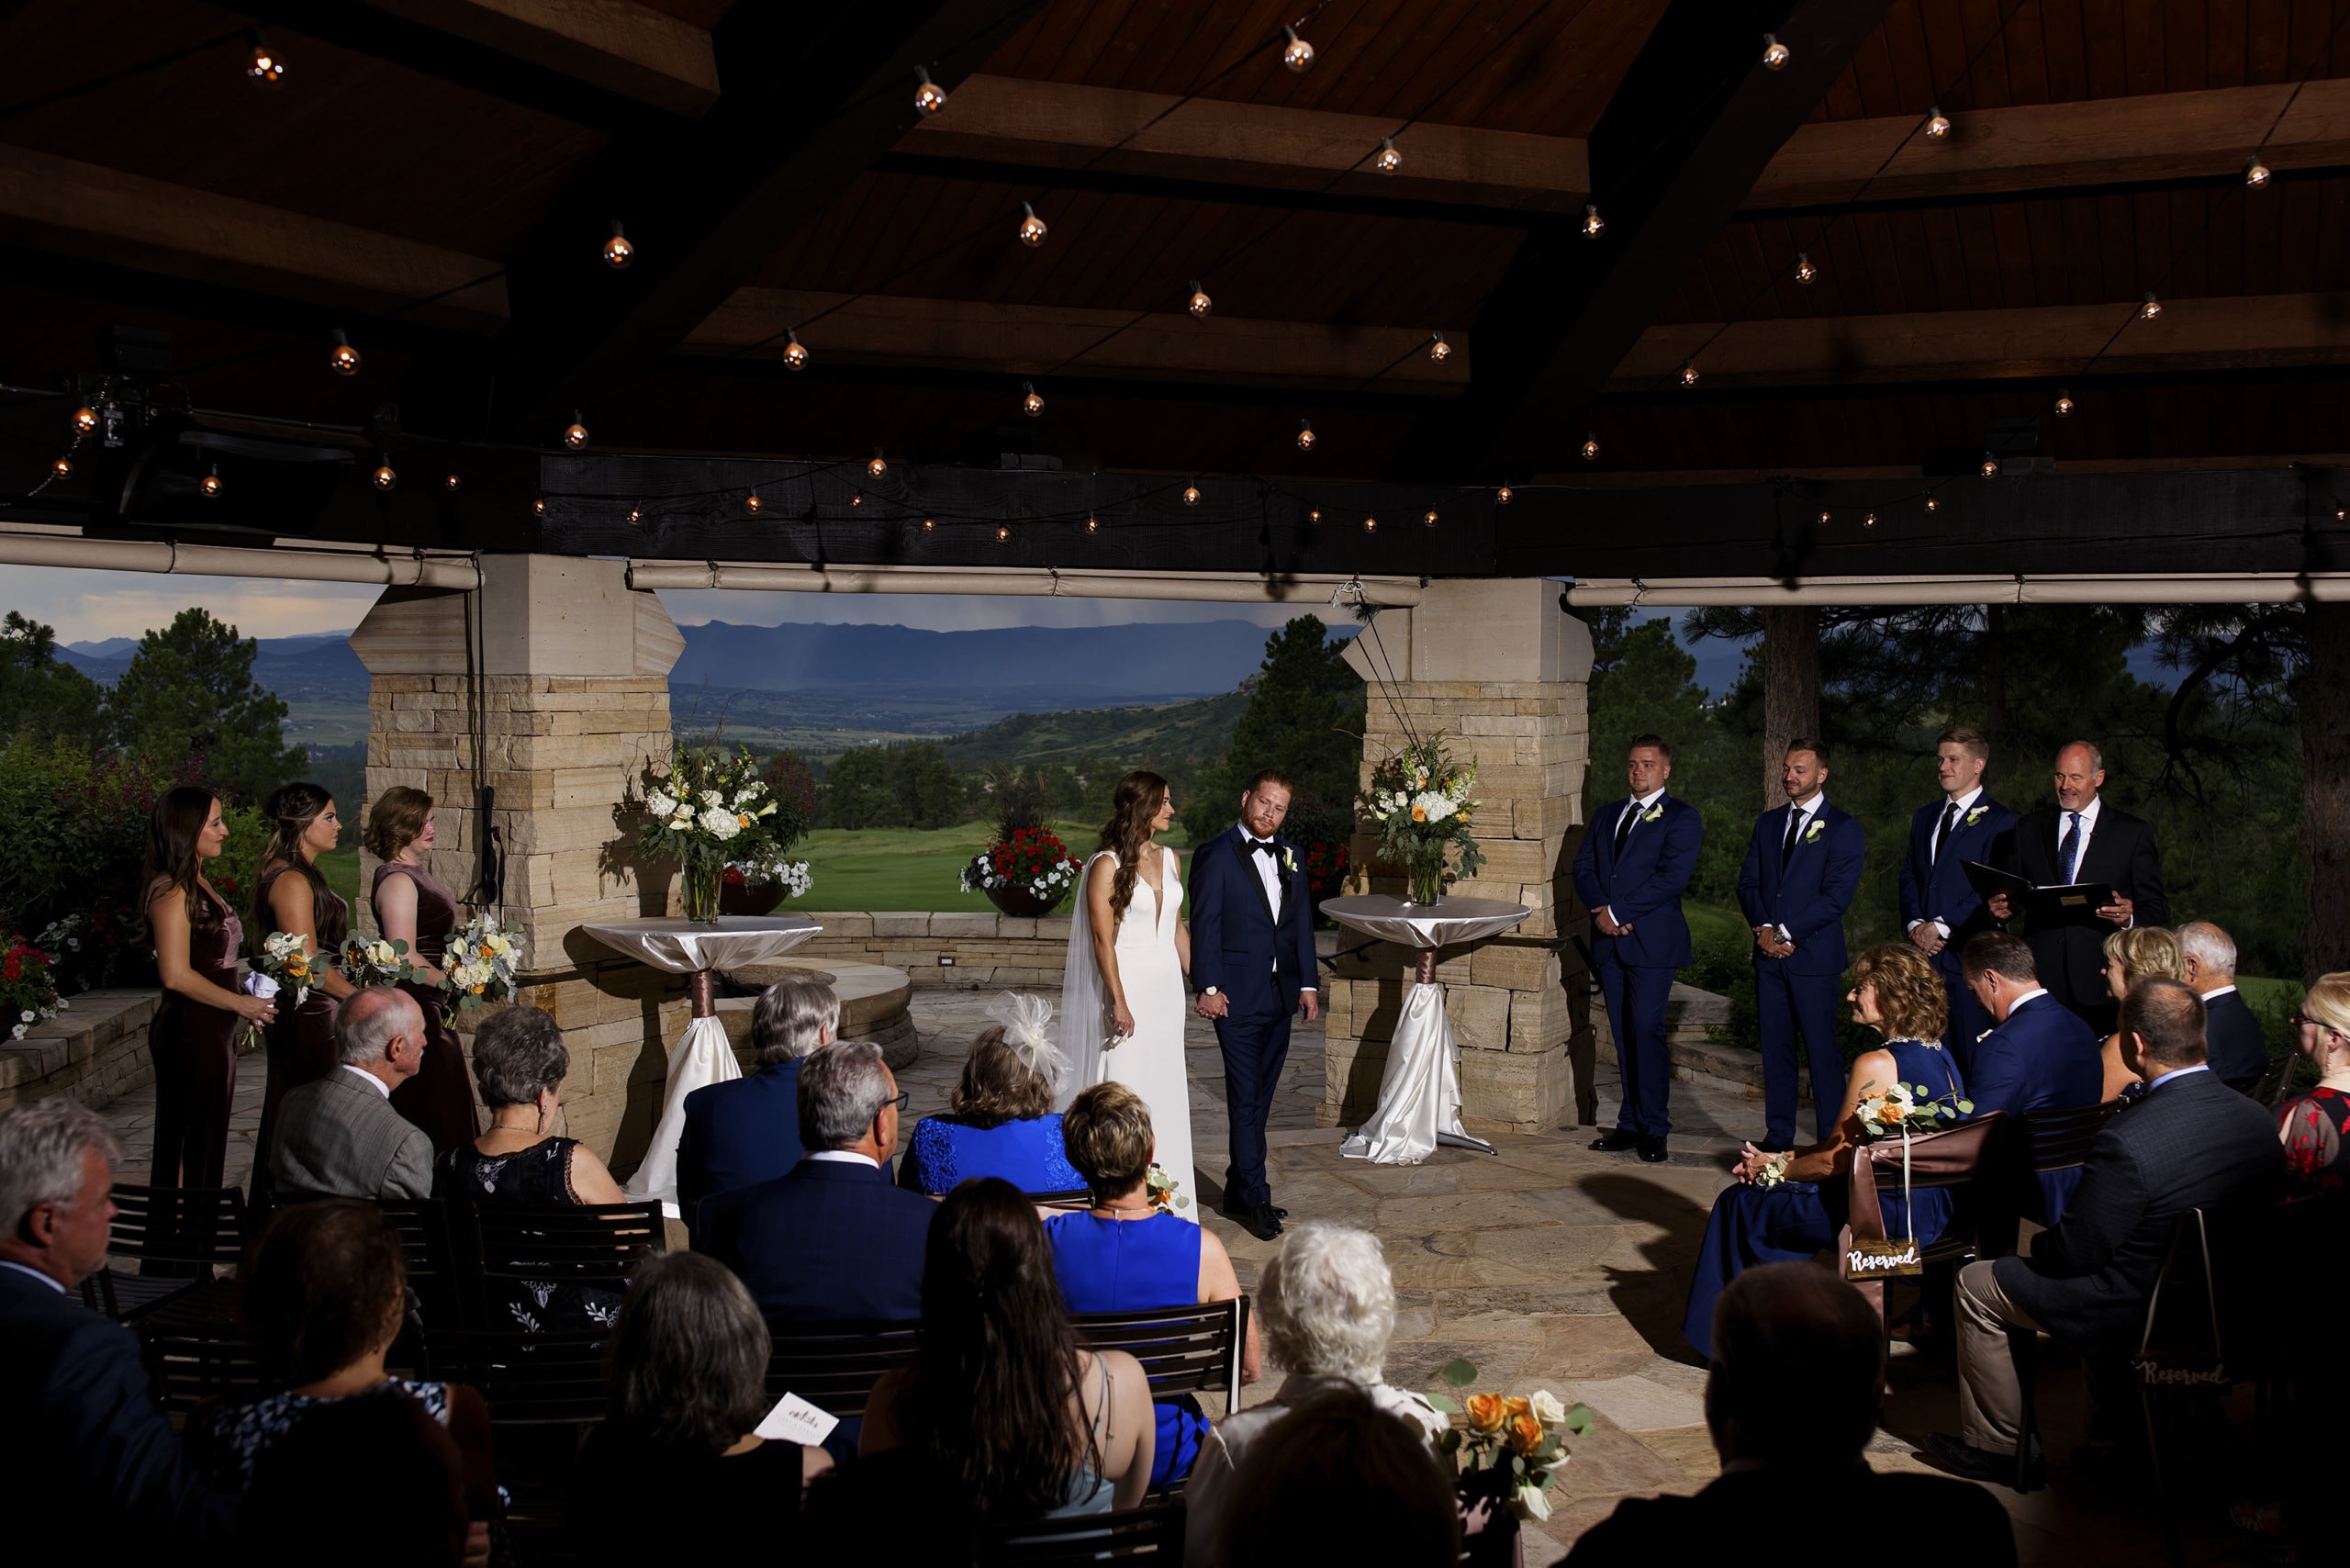 Wedding ceremony at the Sanctuary pavillion